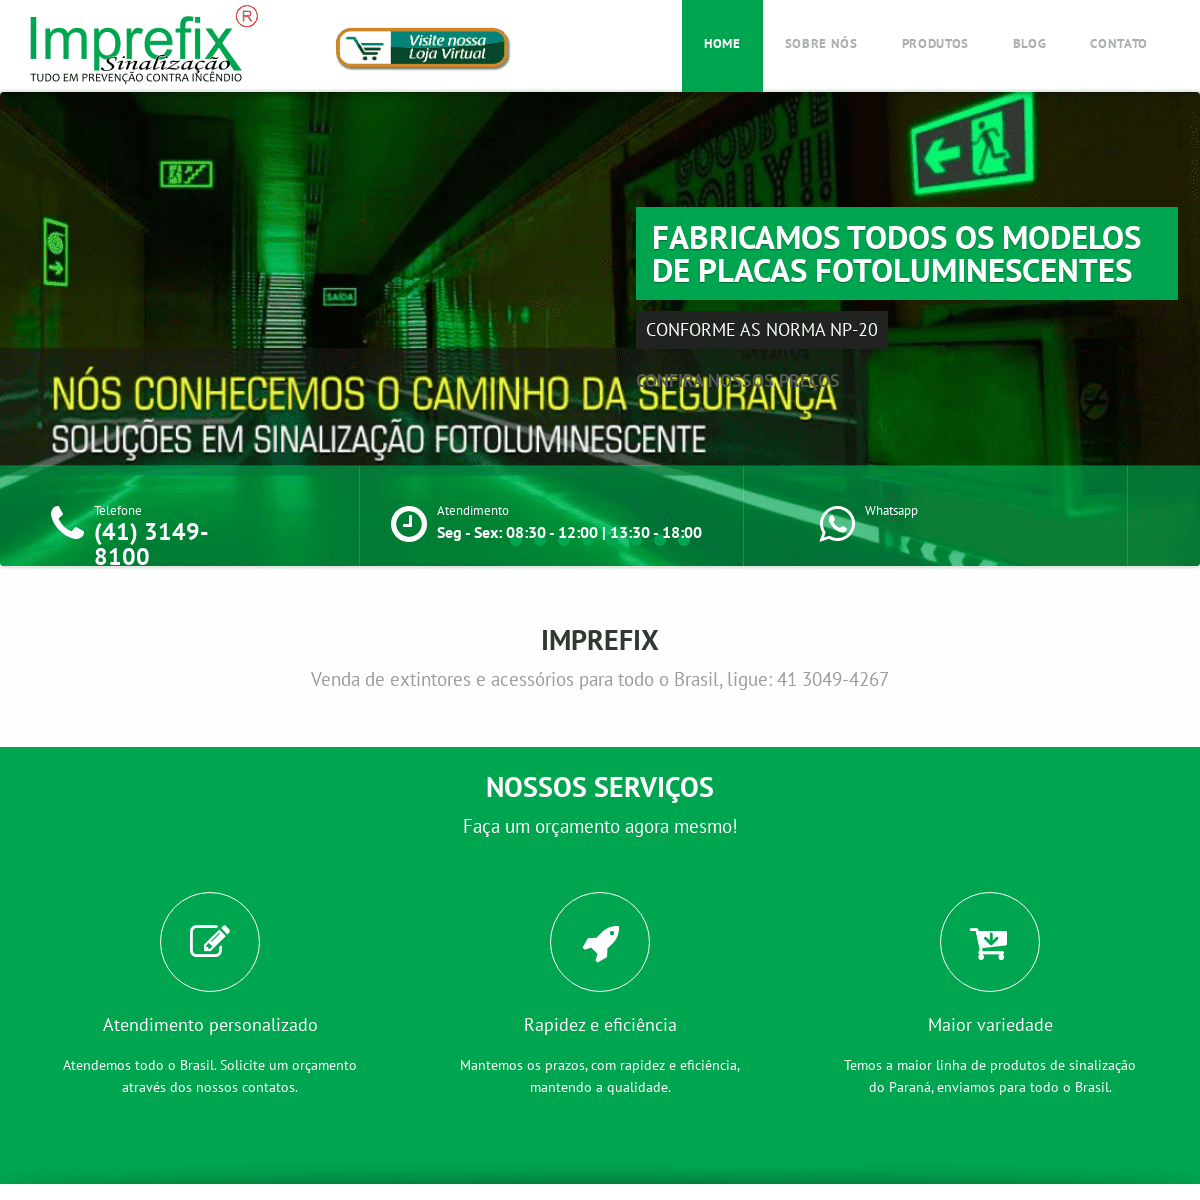 A complete backup of imprefix.com.br